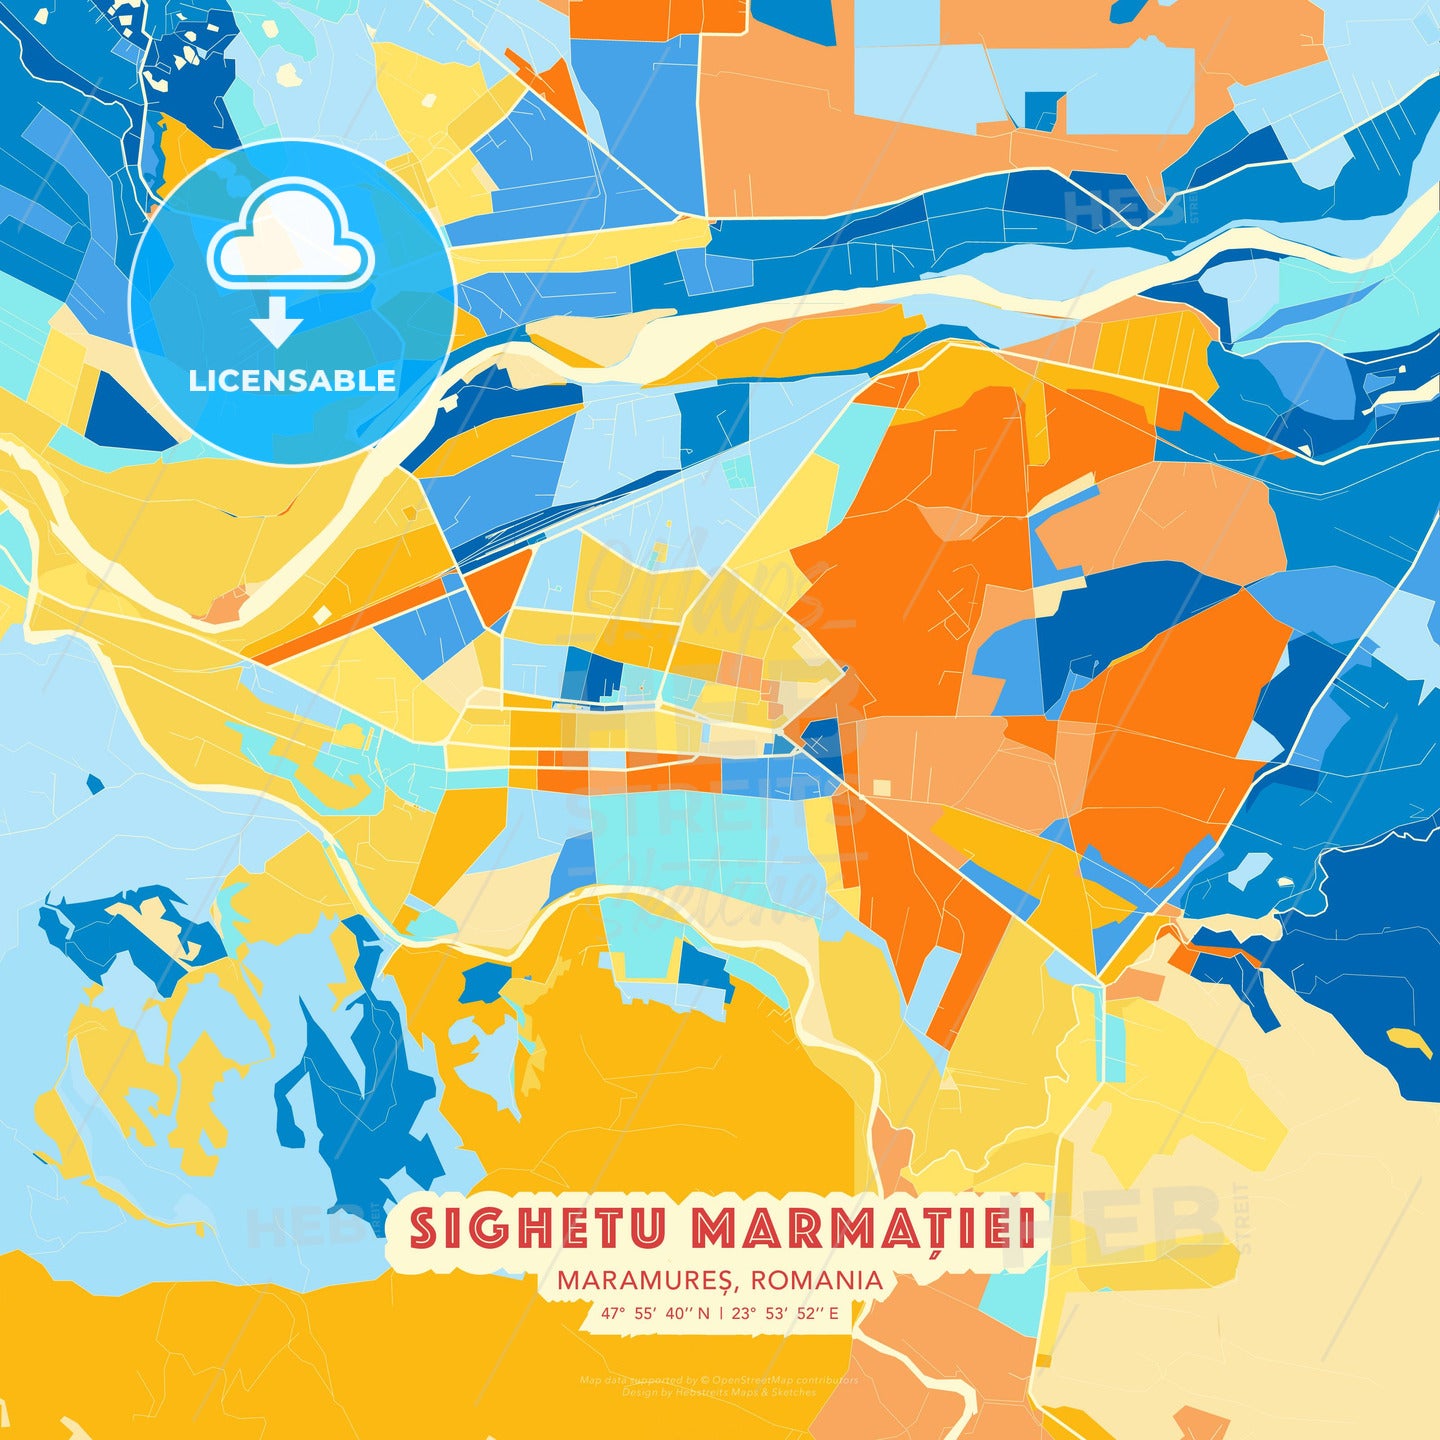 Sighetu Marmației, Maramureș, Romania, map - HEBSTREITS Sketches